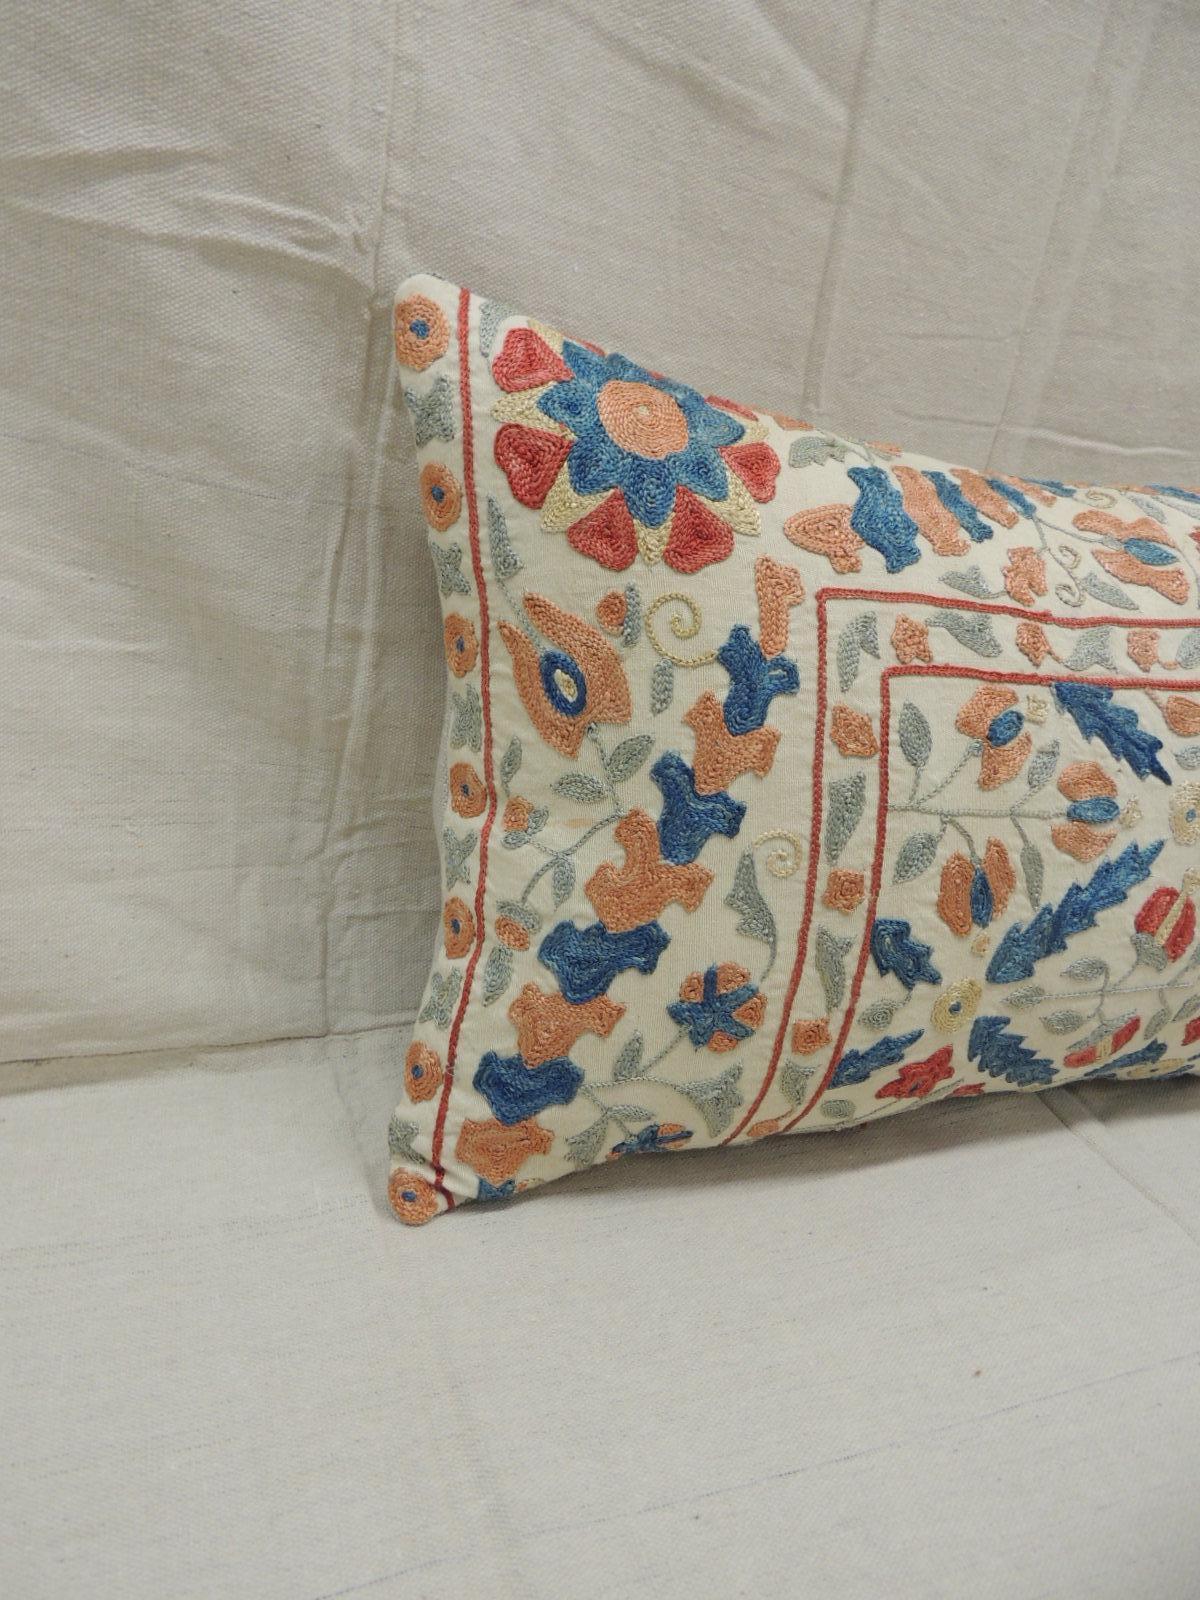 Uzbek Vintage Orange and Blue Embroidered Suzani Decorative Bolster Pillow